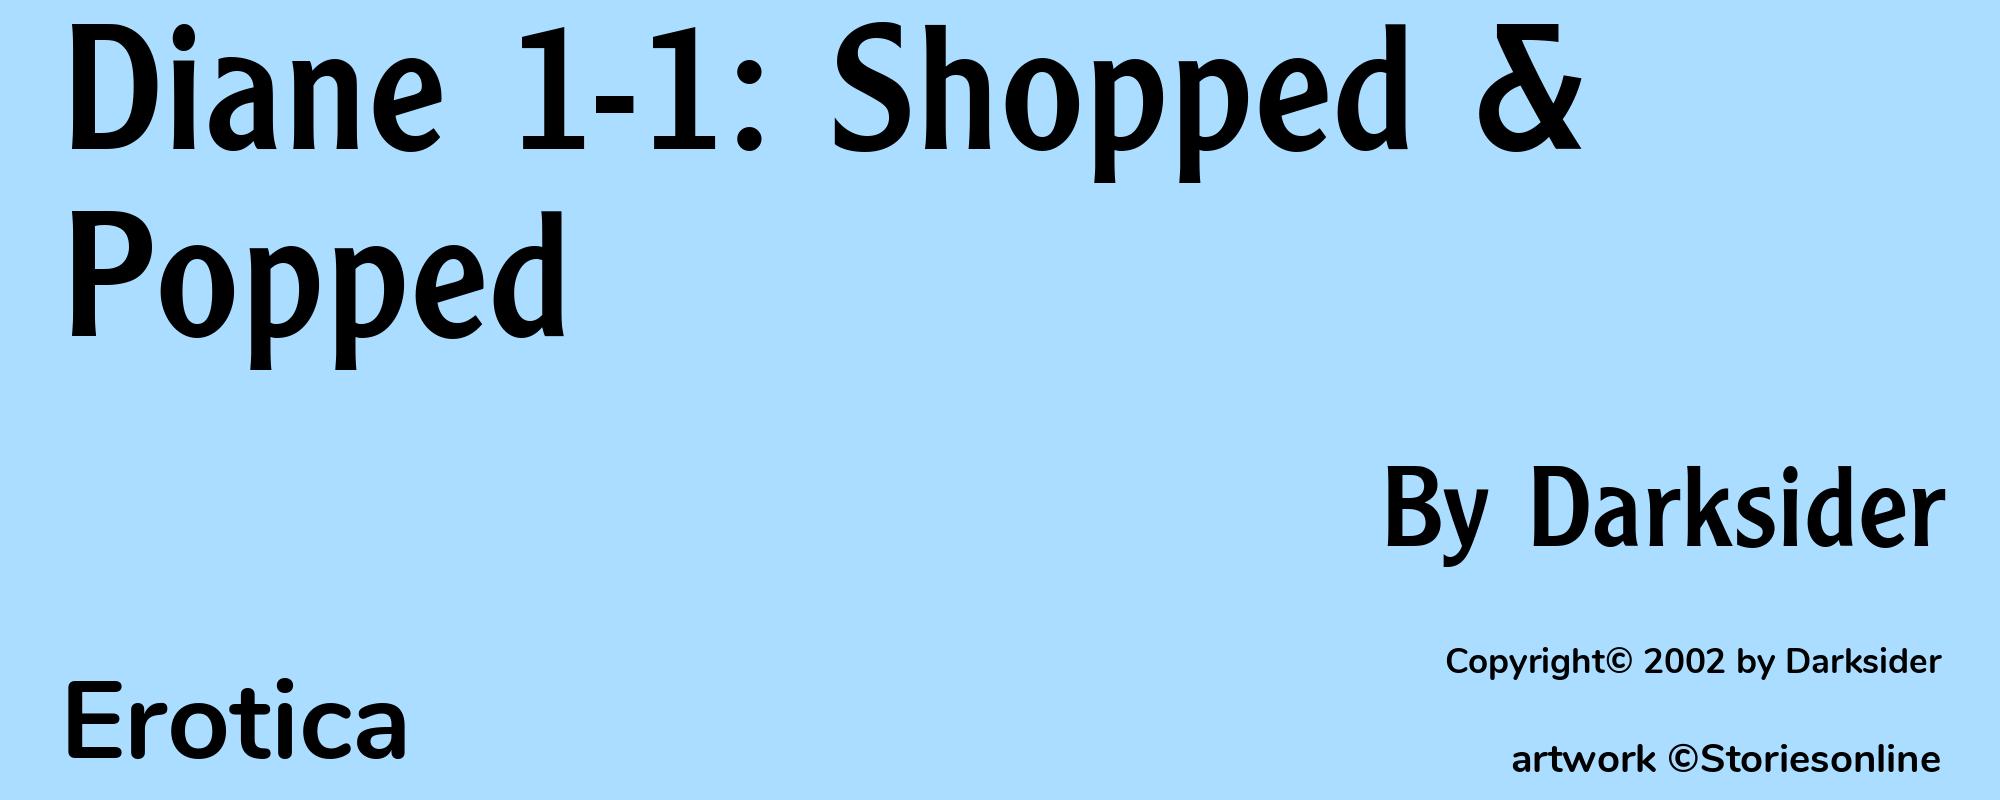 Diane 1-1: Shopped & Popped - Cover